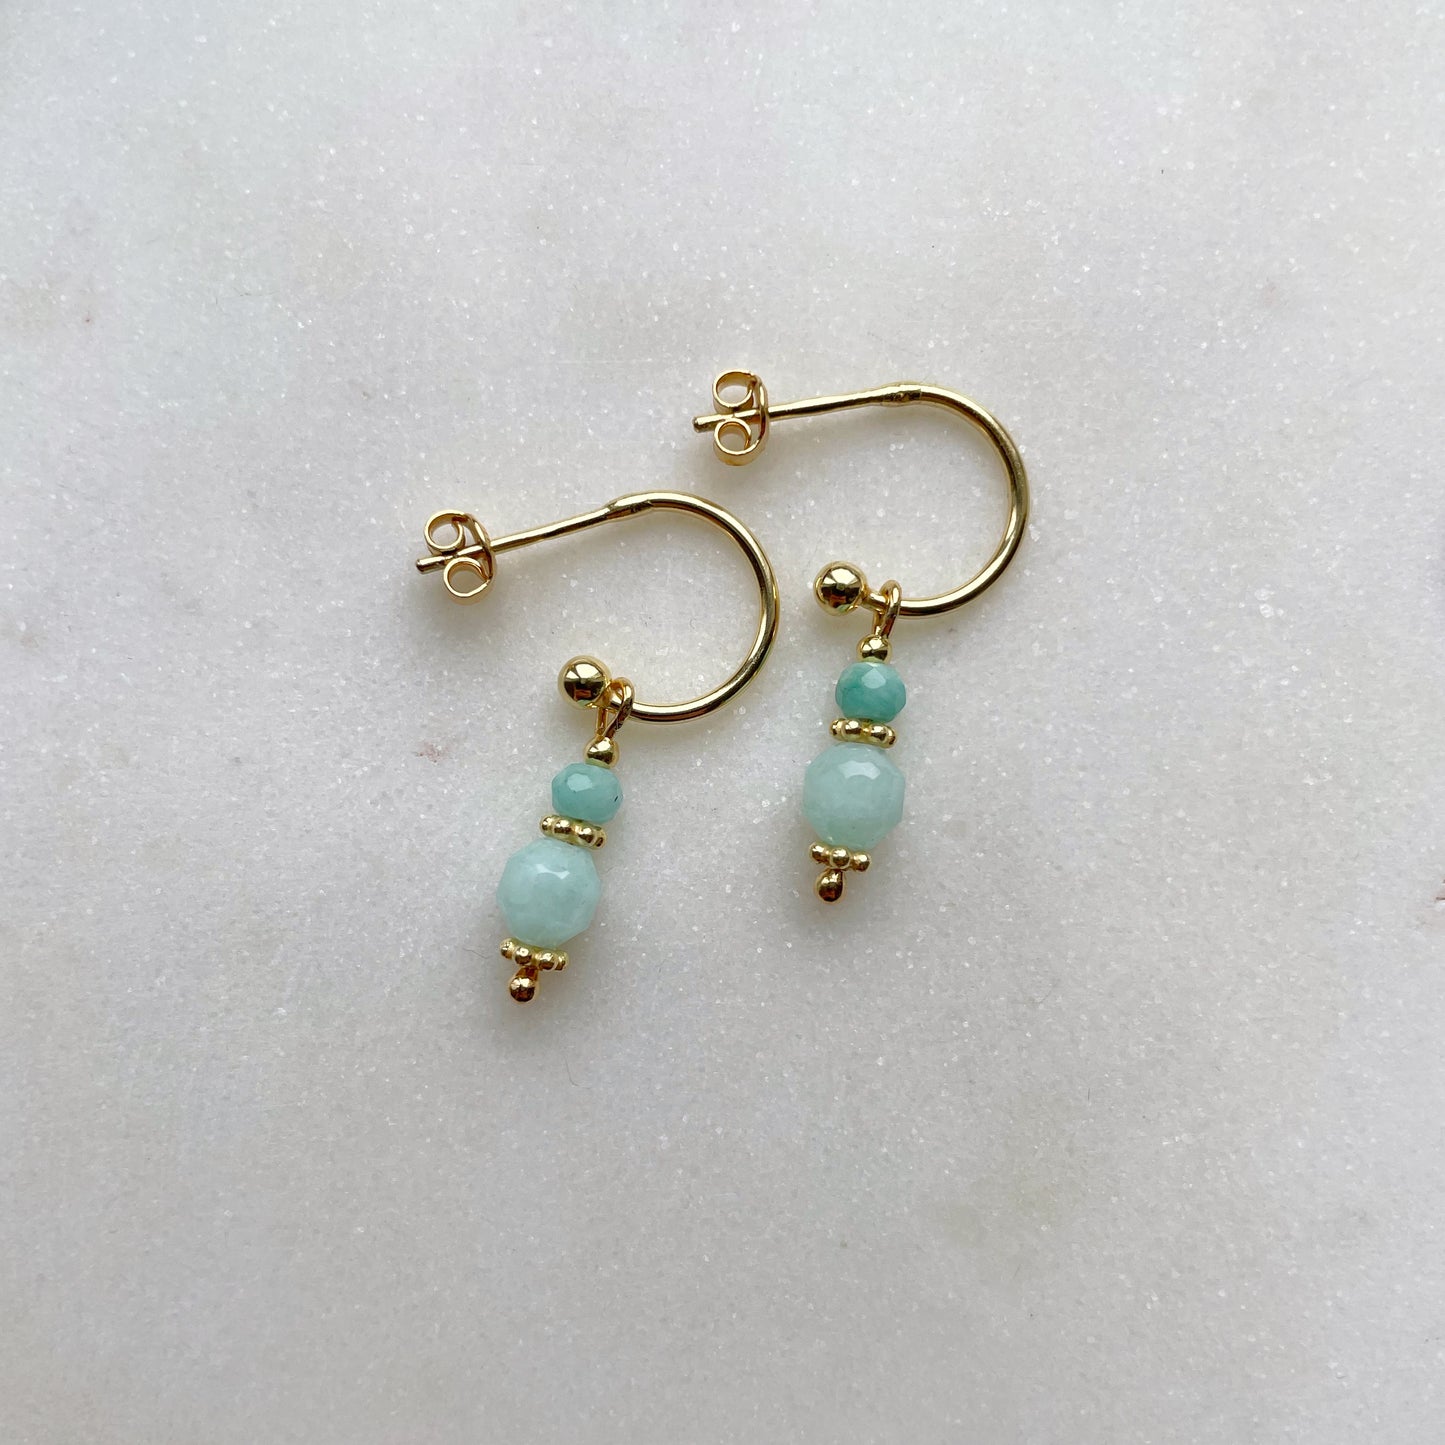 Royal Amazonite earrings